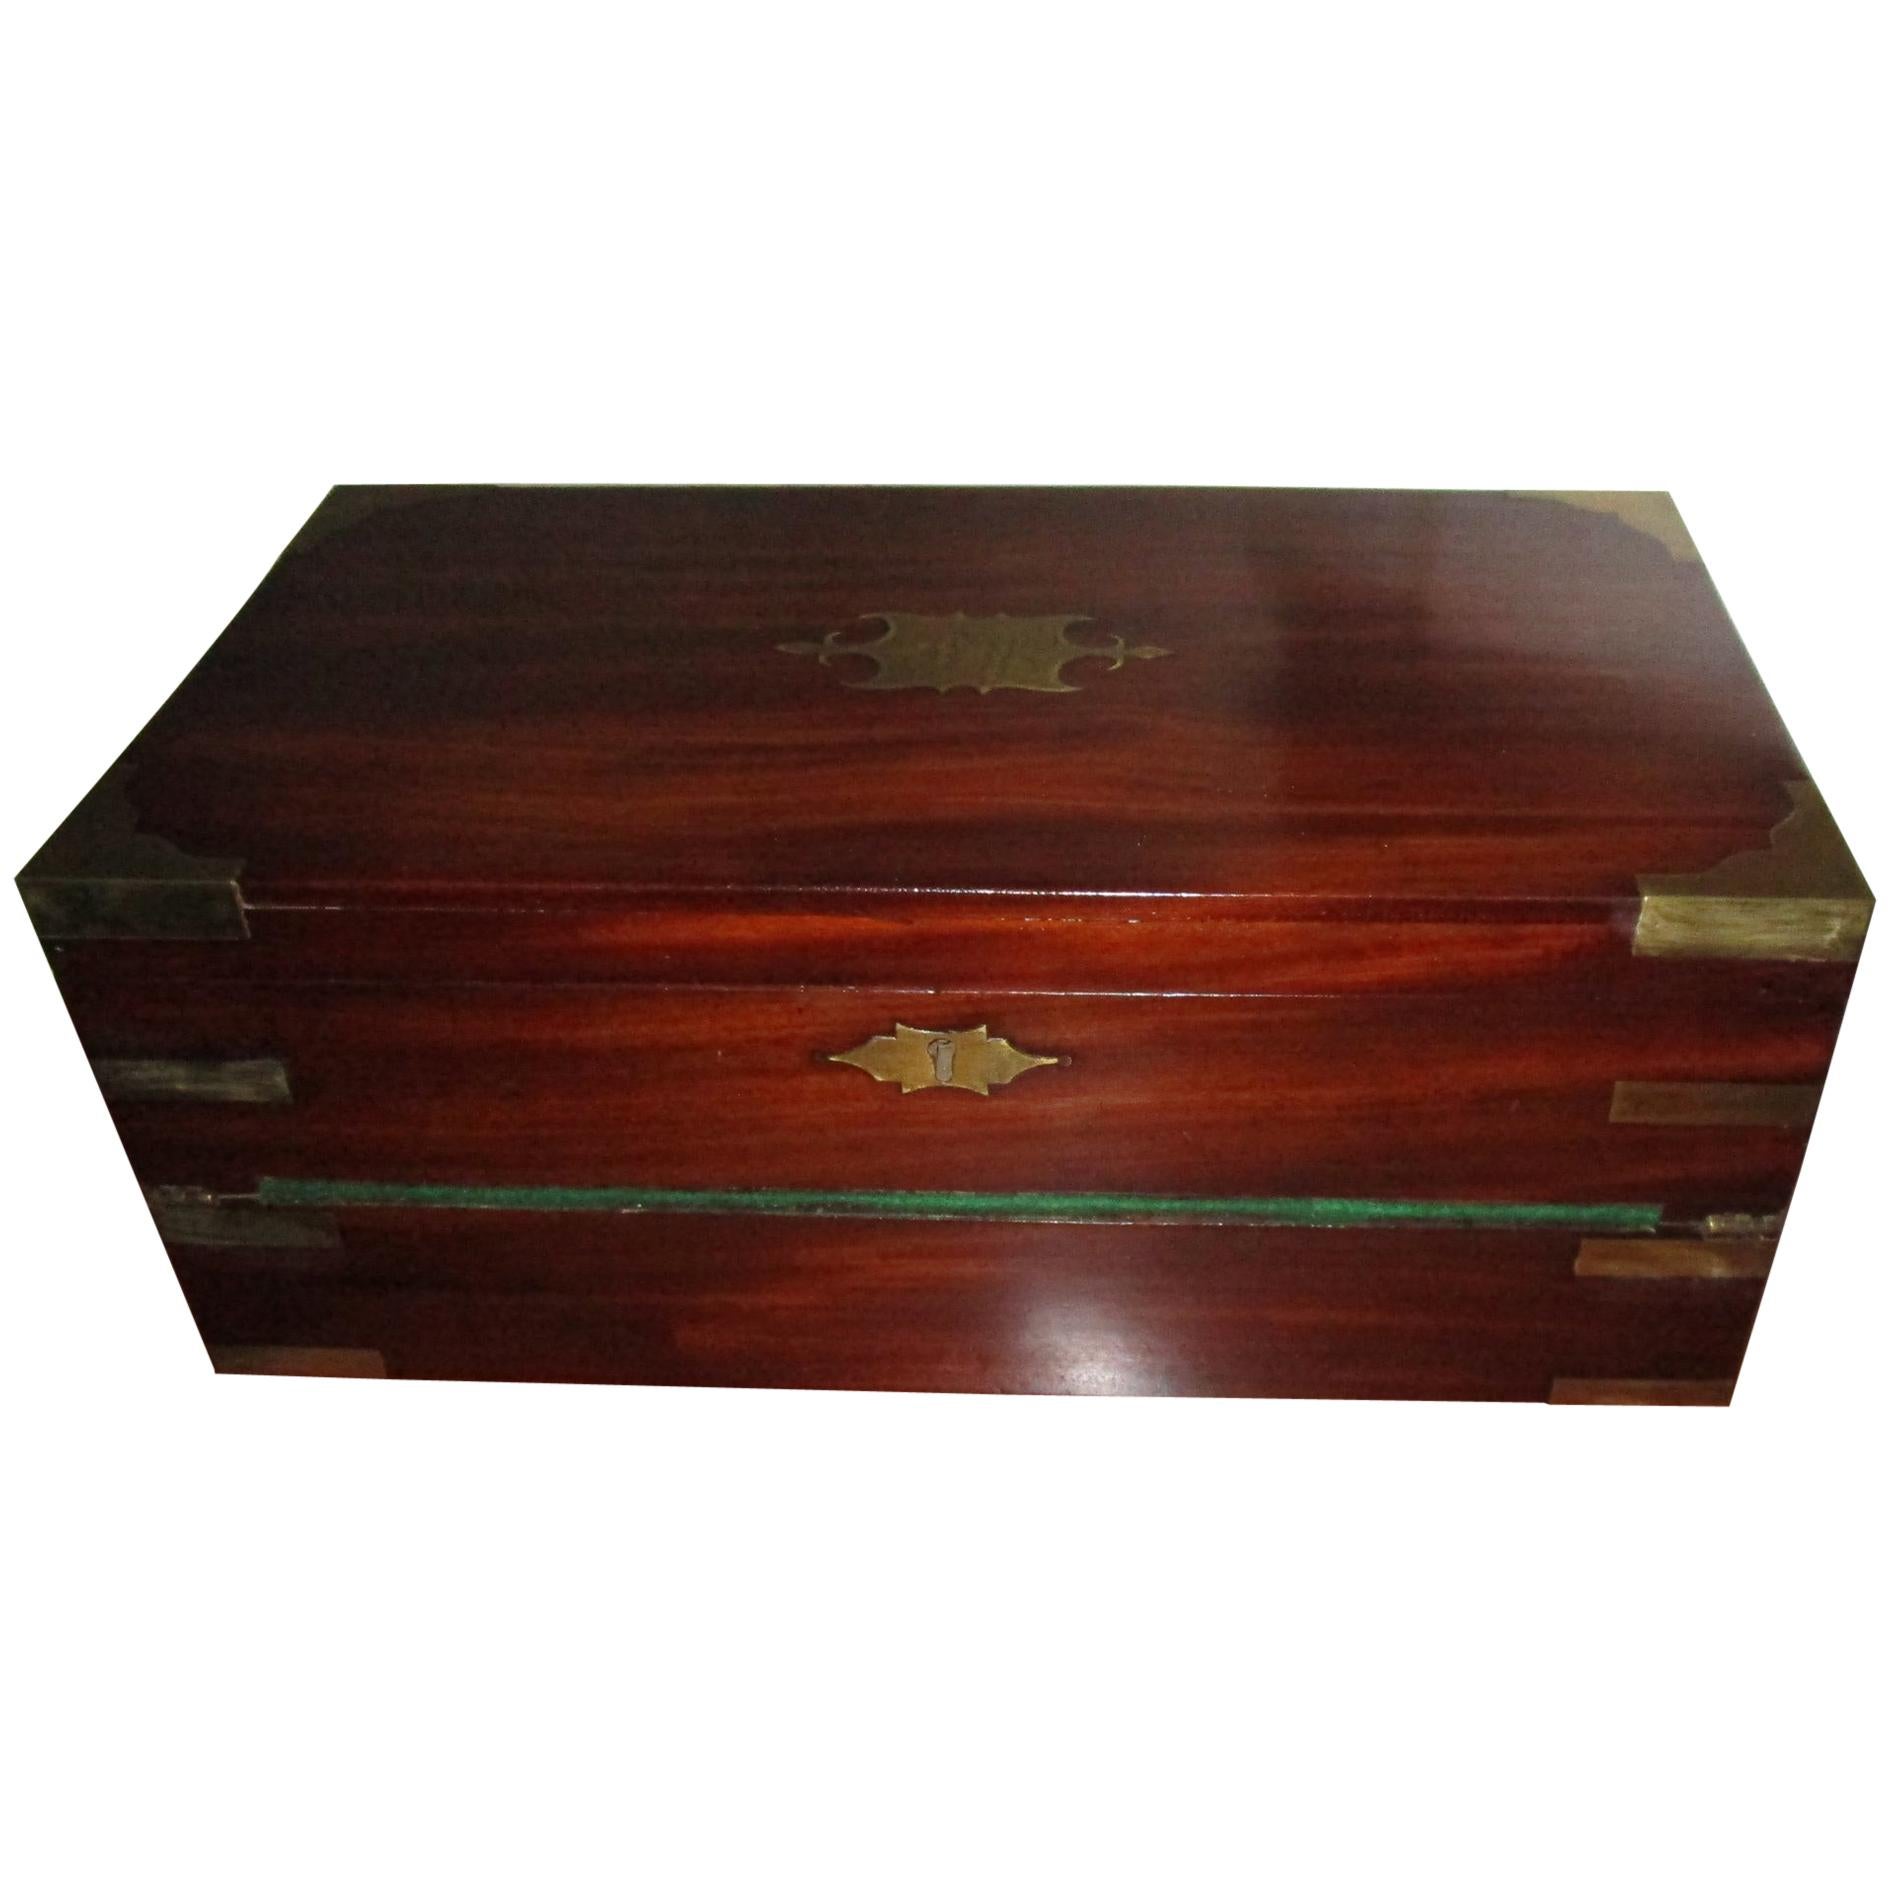 English Regency Mahogany Travelling Lap Desk Box with Secret Compartment